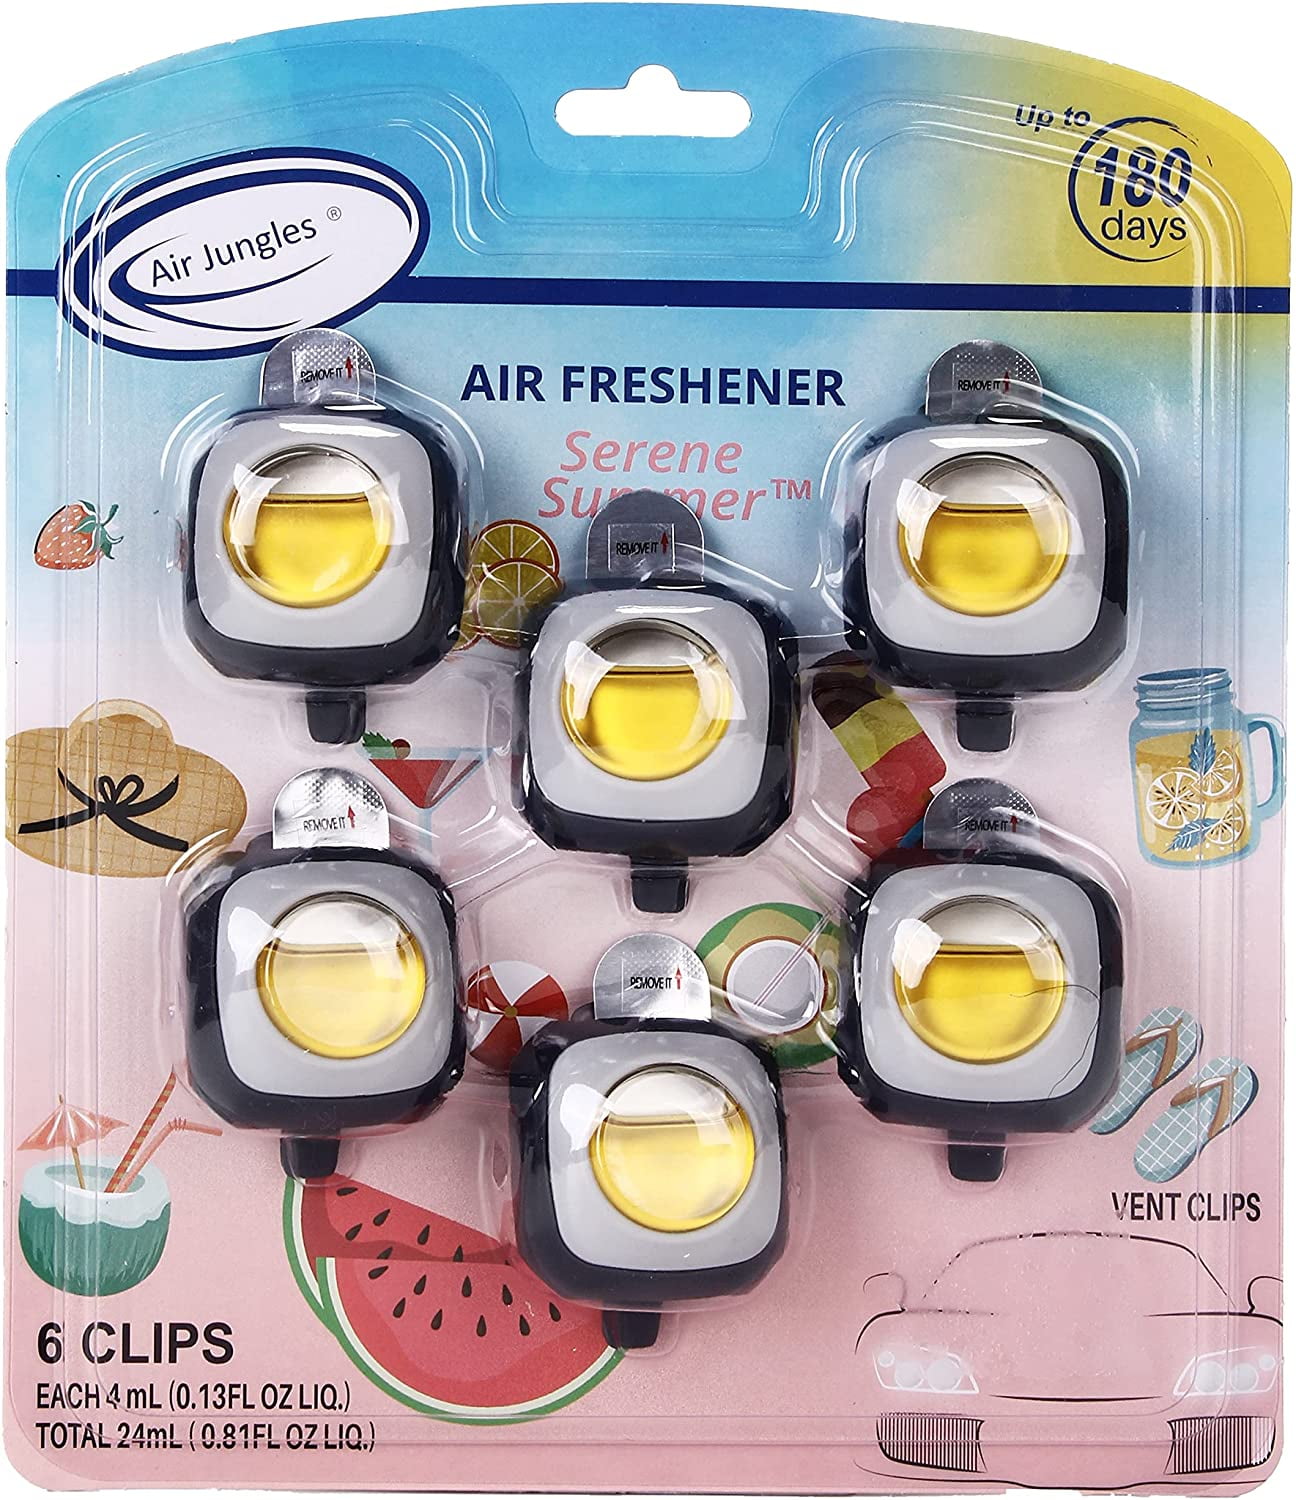 Air Jungles Honey Peach Scent Car Air Freshener Clip, 6 Car Freshener Vent Clips, 4ml Each, Long Lasting Air Freshener for Car, Up to 180 Days